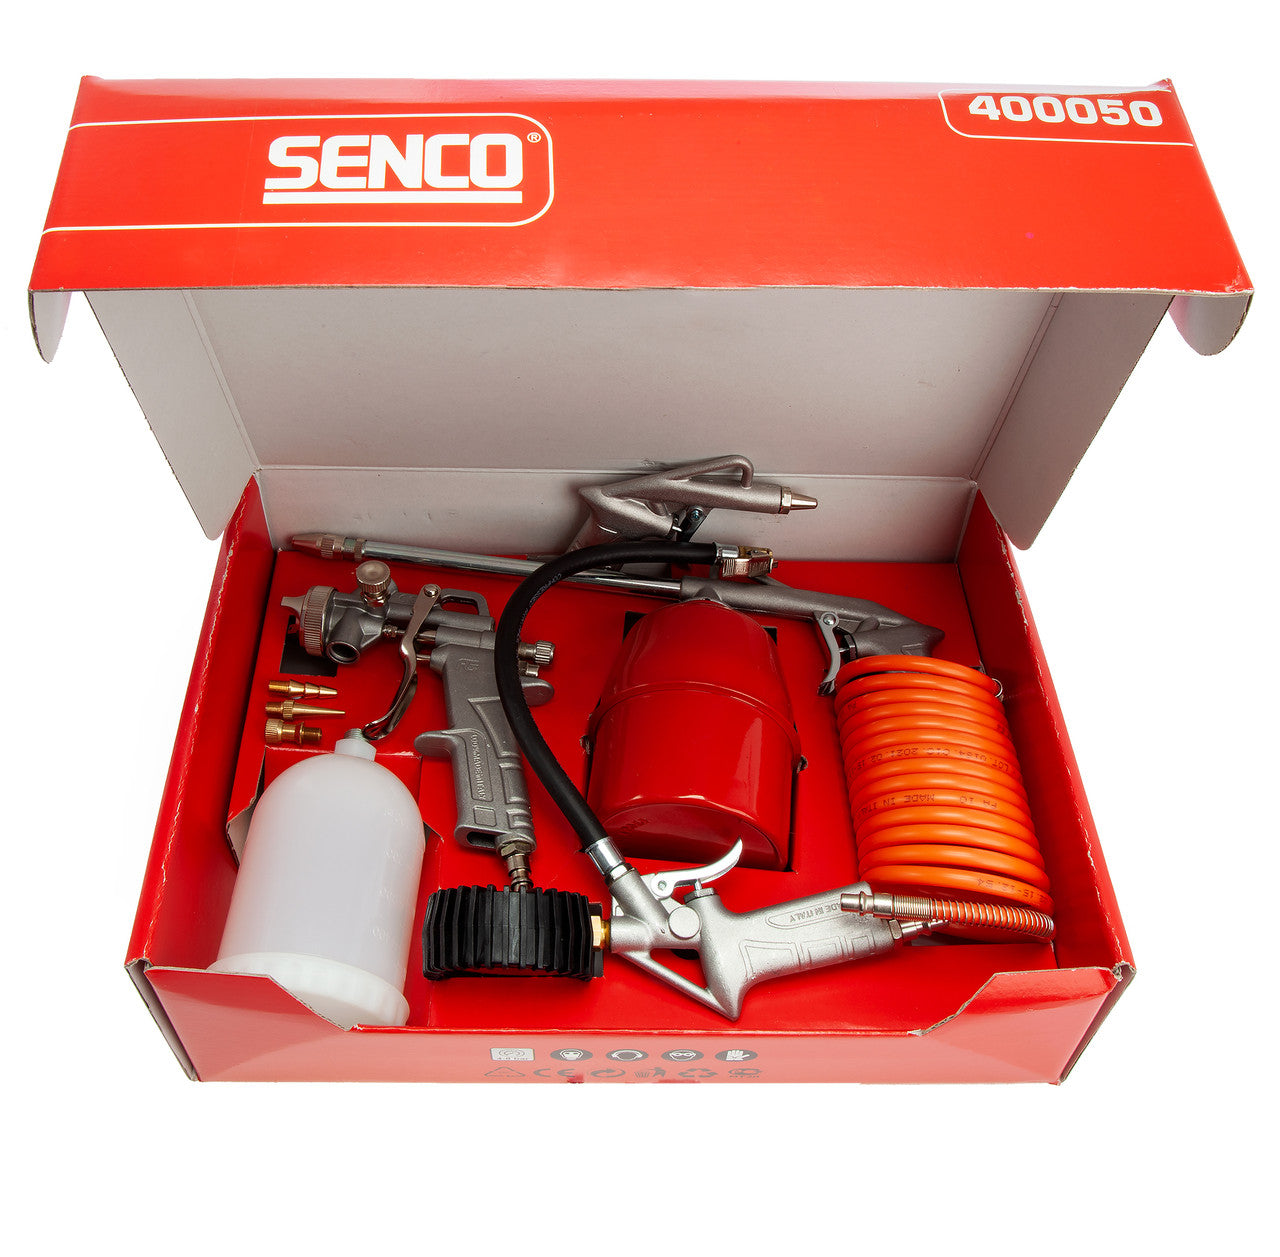 Senco 400050 Air Accessory Kit (9 Piece)